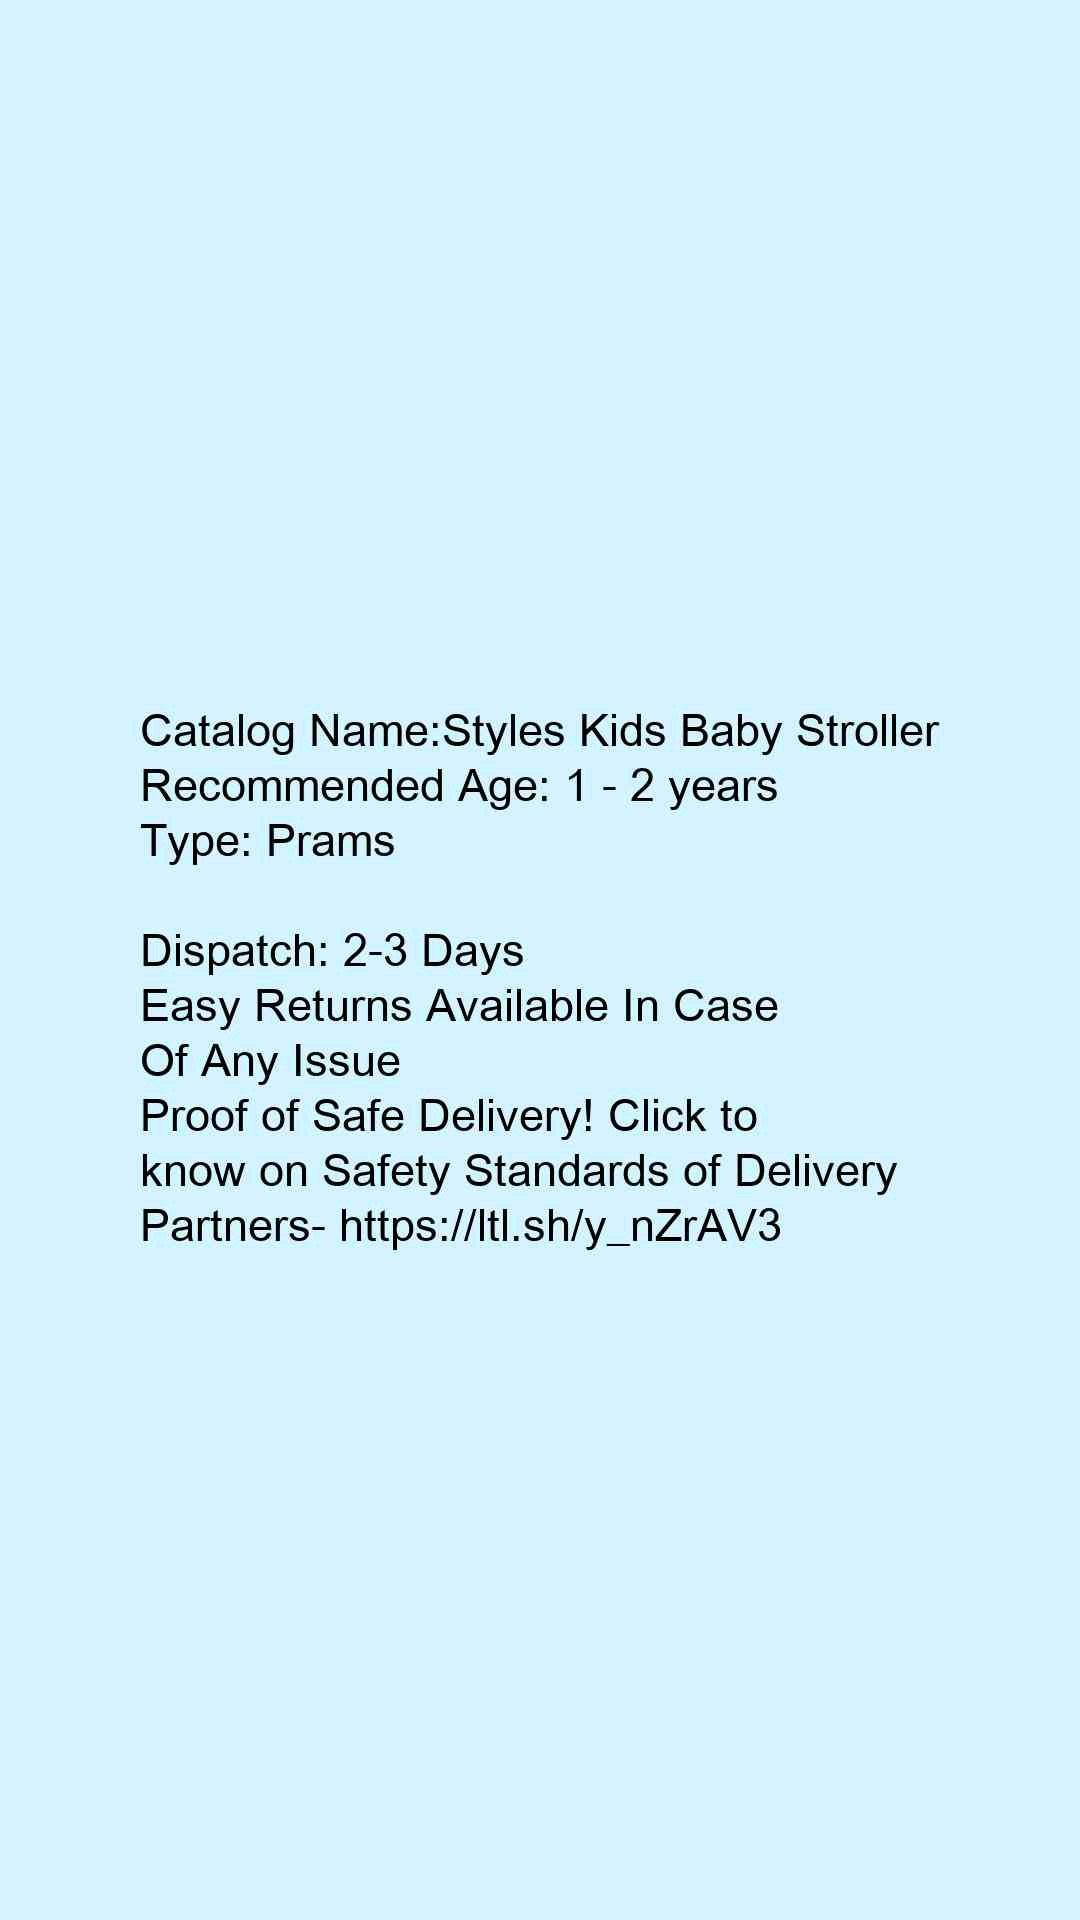 Styles Kids Baby Stroller - Faritha